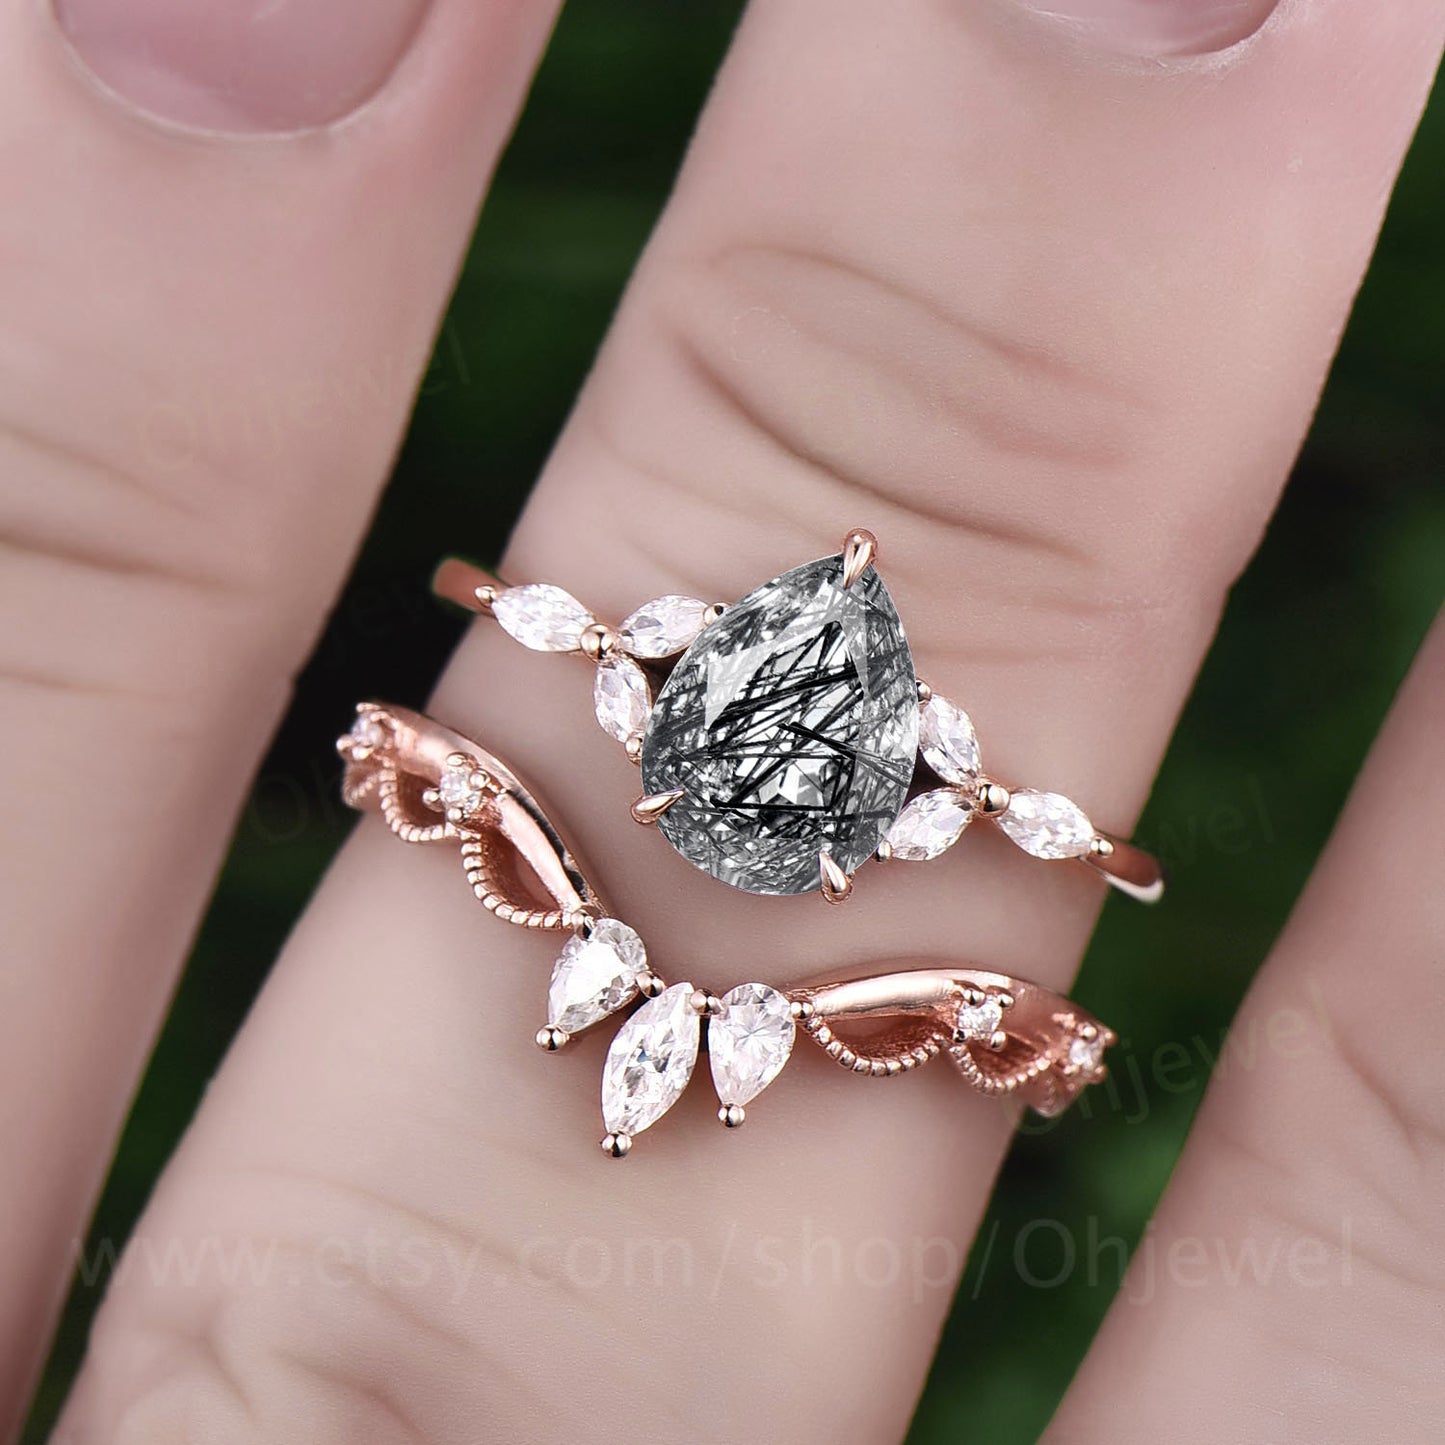 Pear black rutilated quartz engagement ring set rose gold silver ring art deco crown Milgrain dainty ring jewelry unique wedding ring set